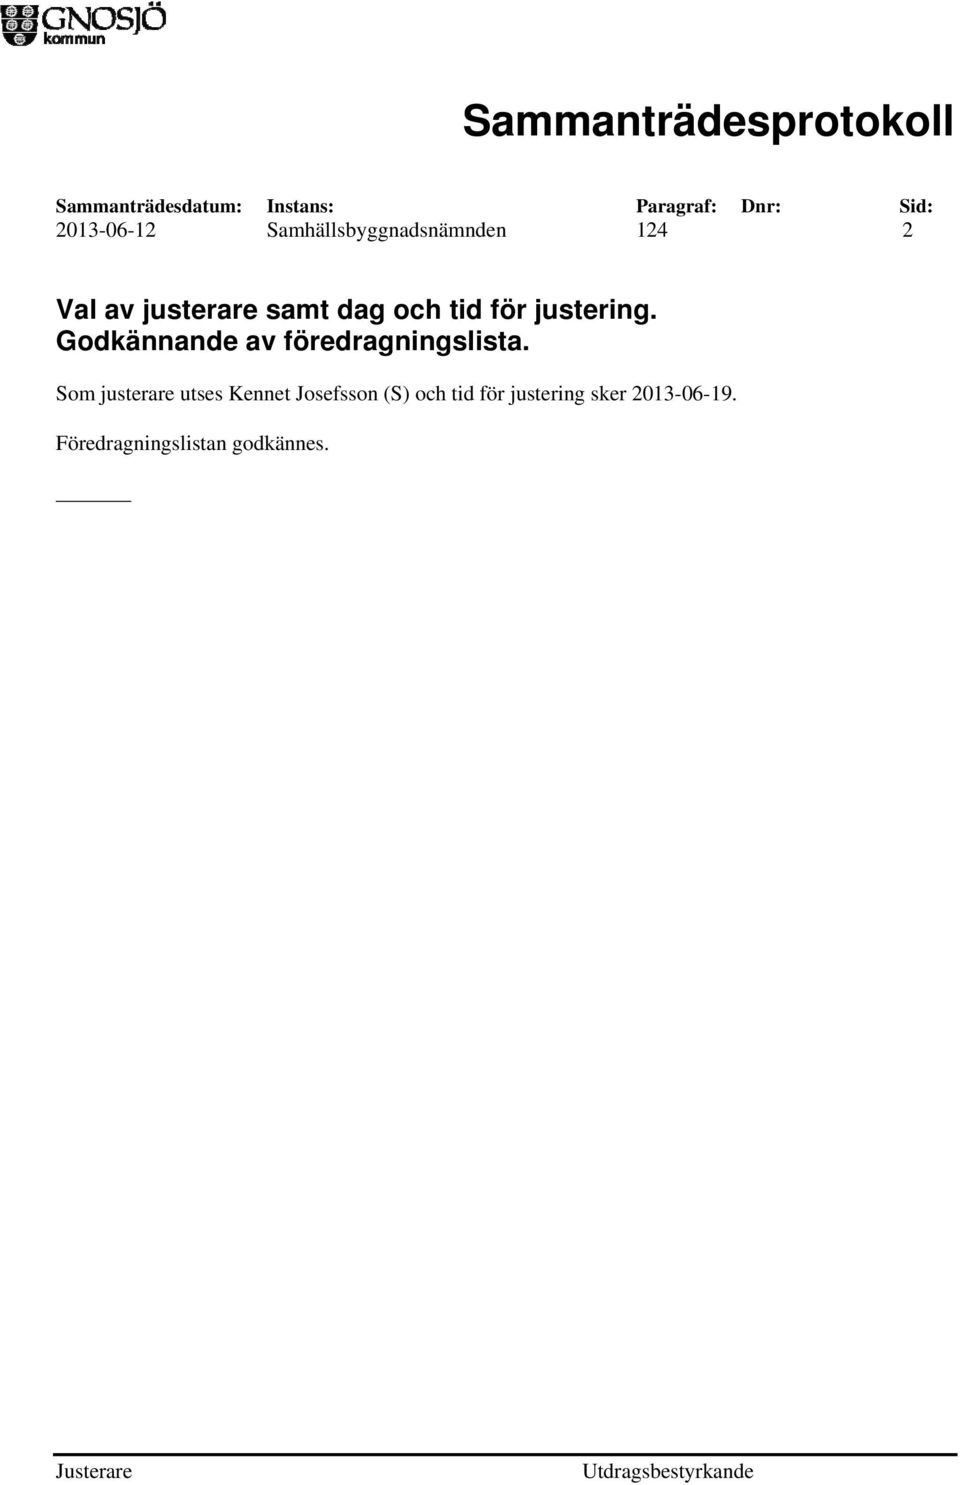 Sammanträdesprotokoll - PDF Free Download